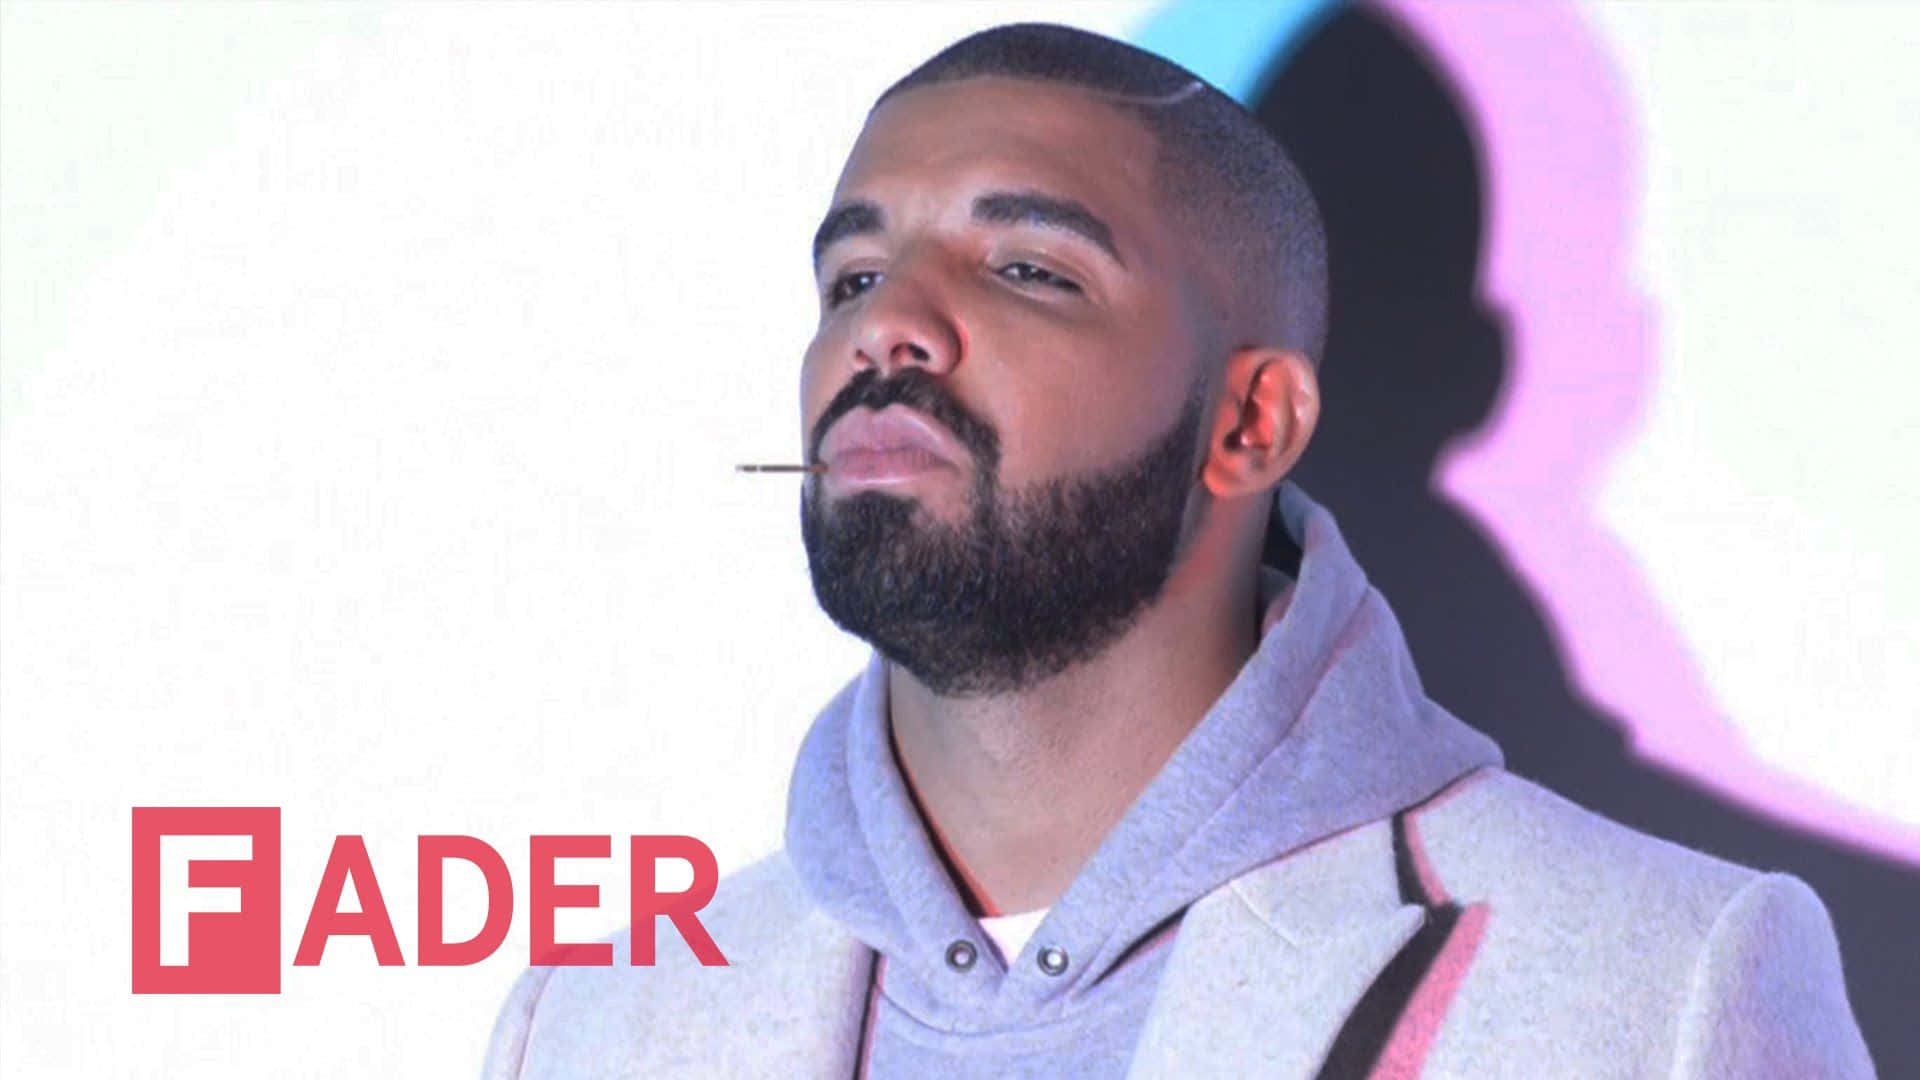 Grammy-Winning Artist Drake Performs on Stage